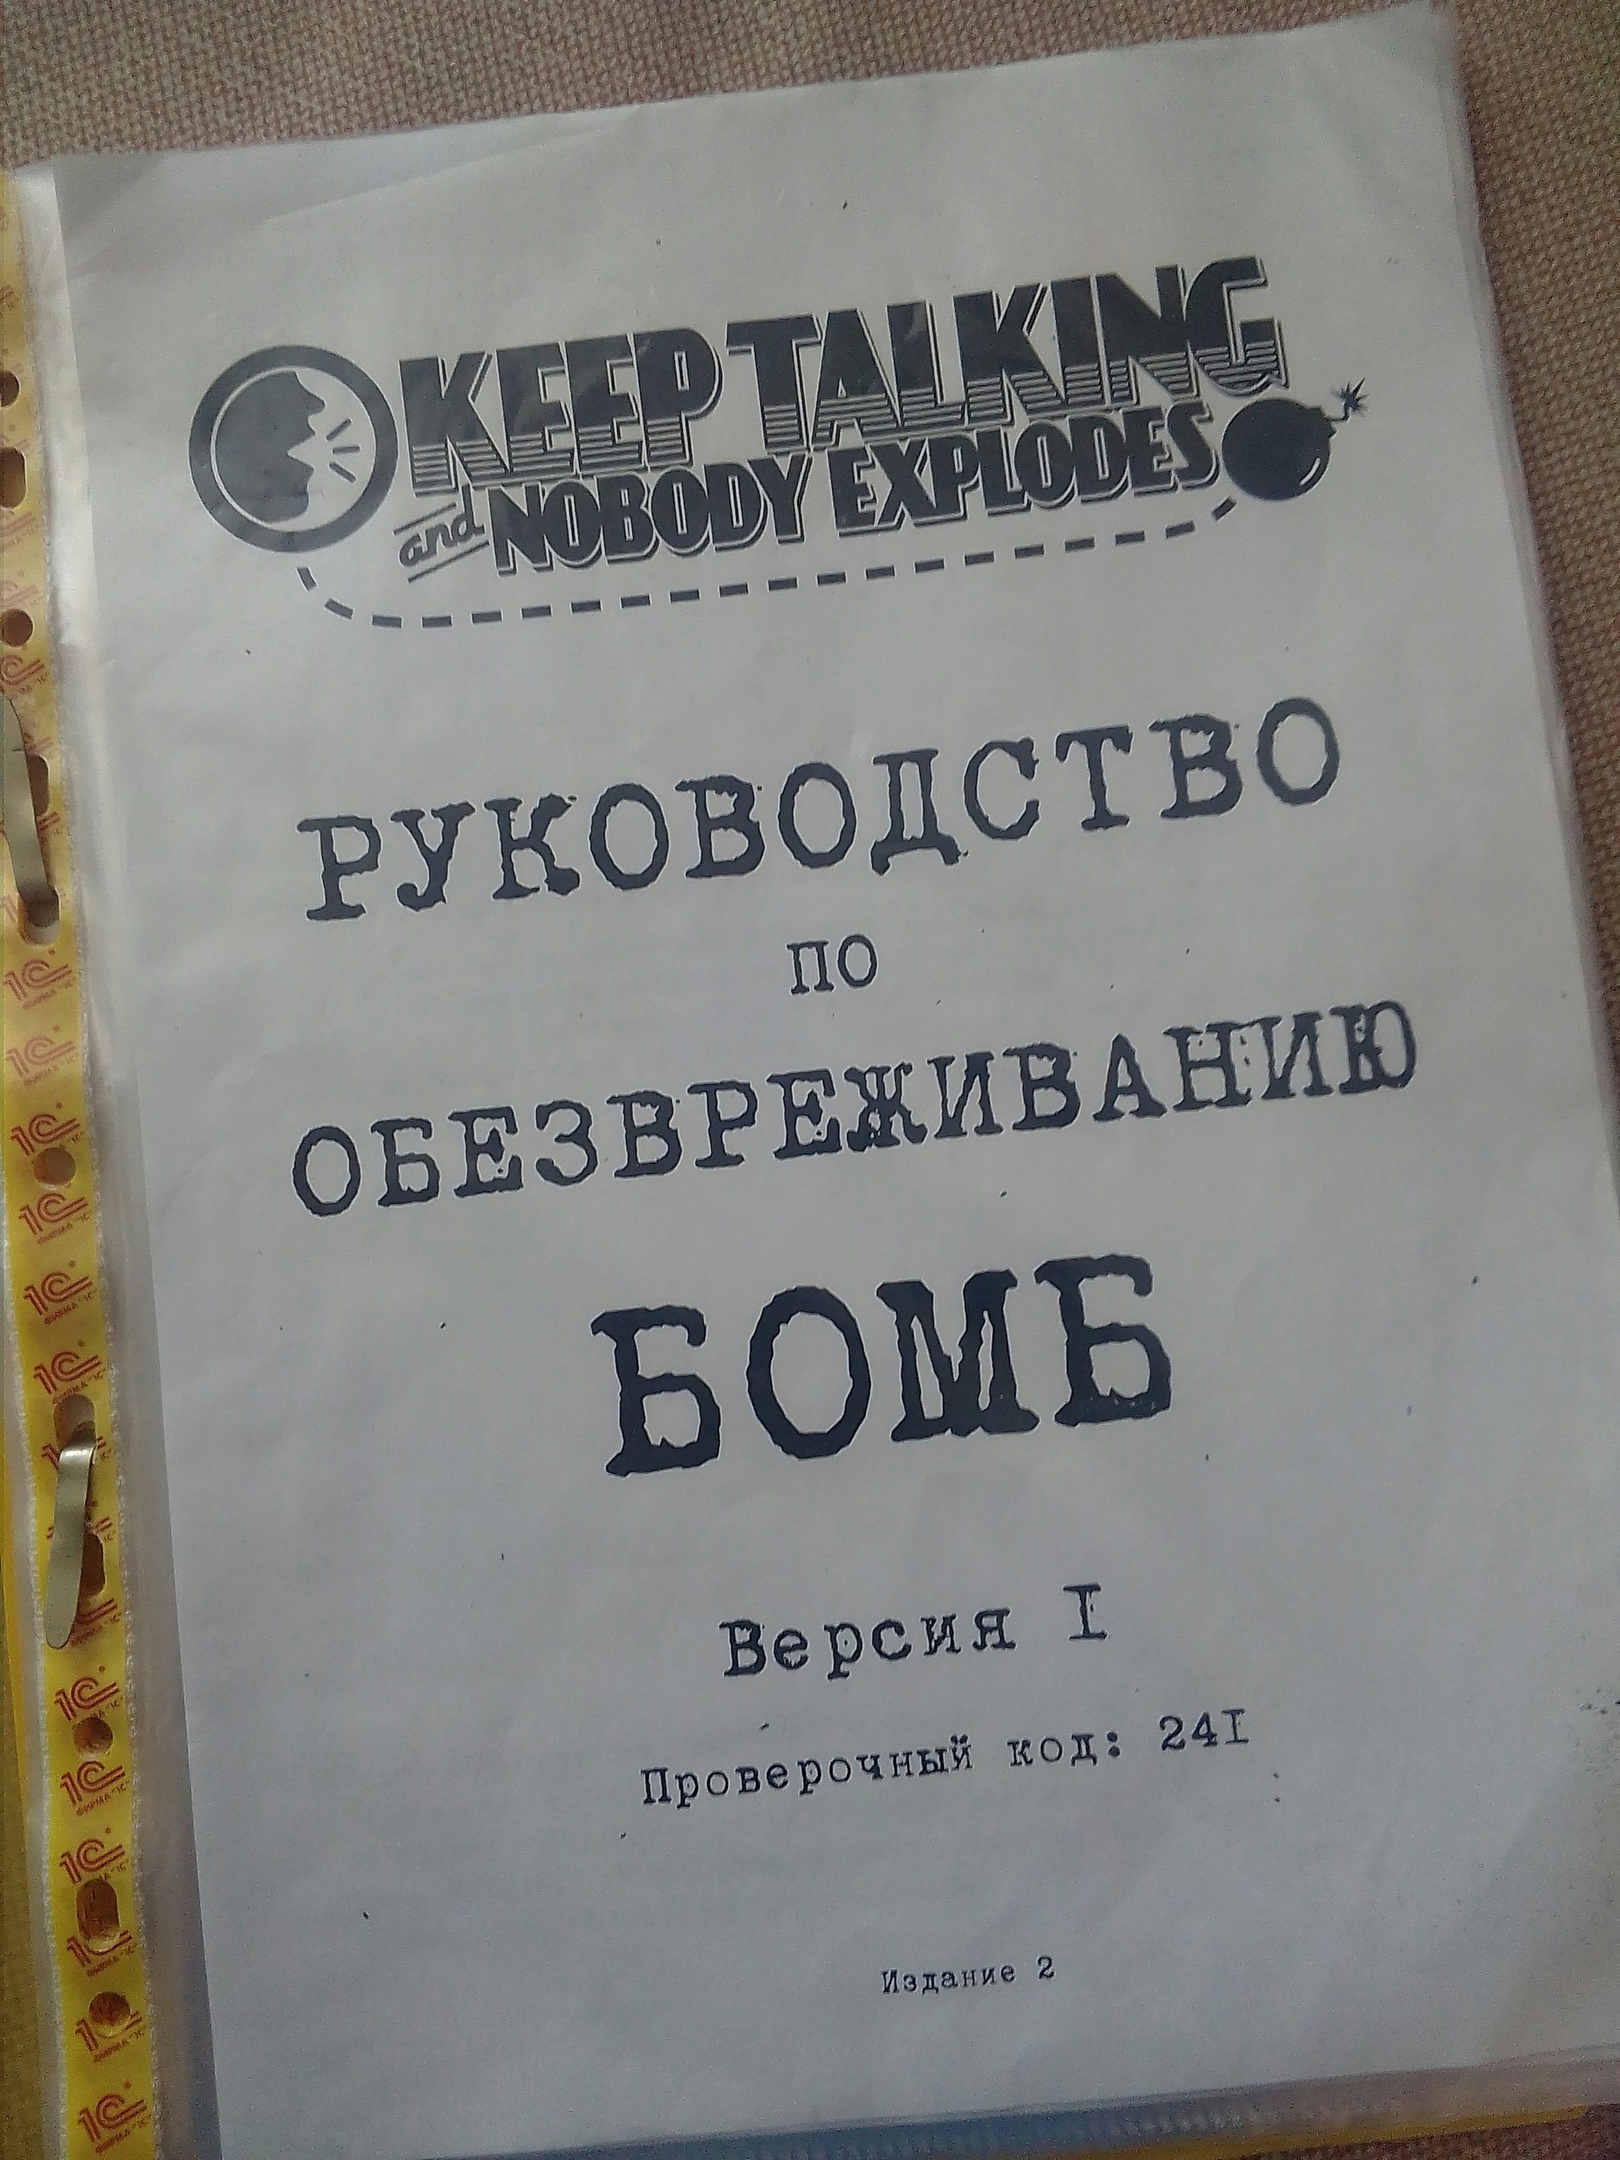 Keep talking and nobody explodes ? image 16